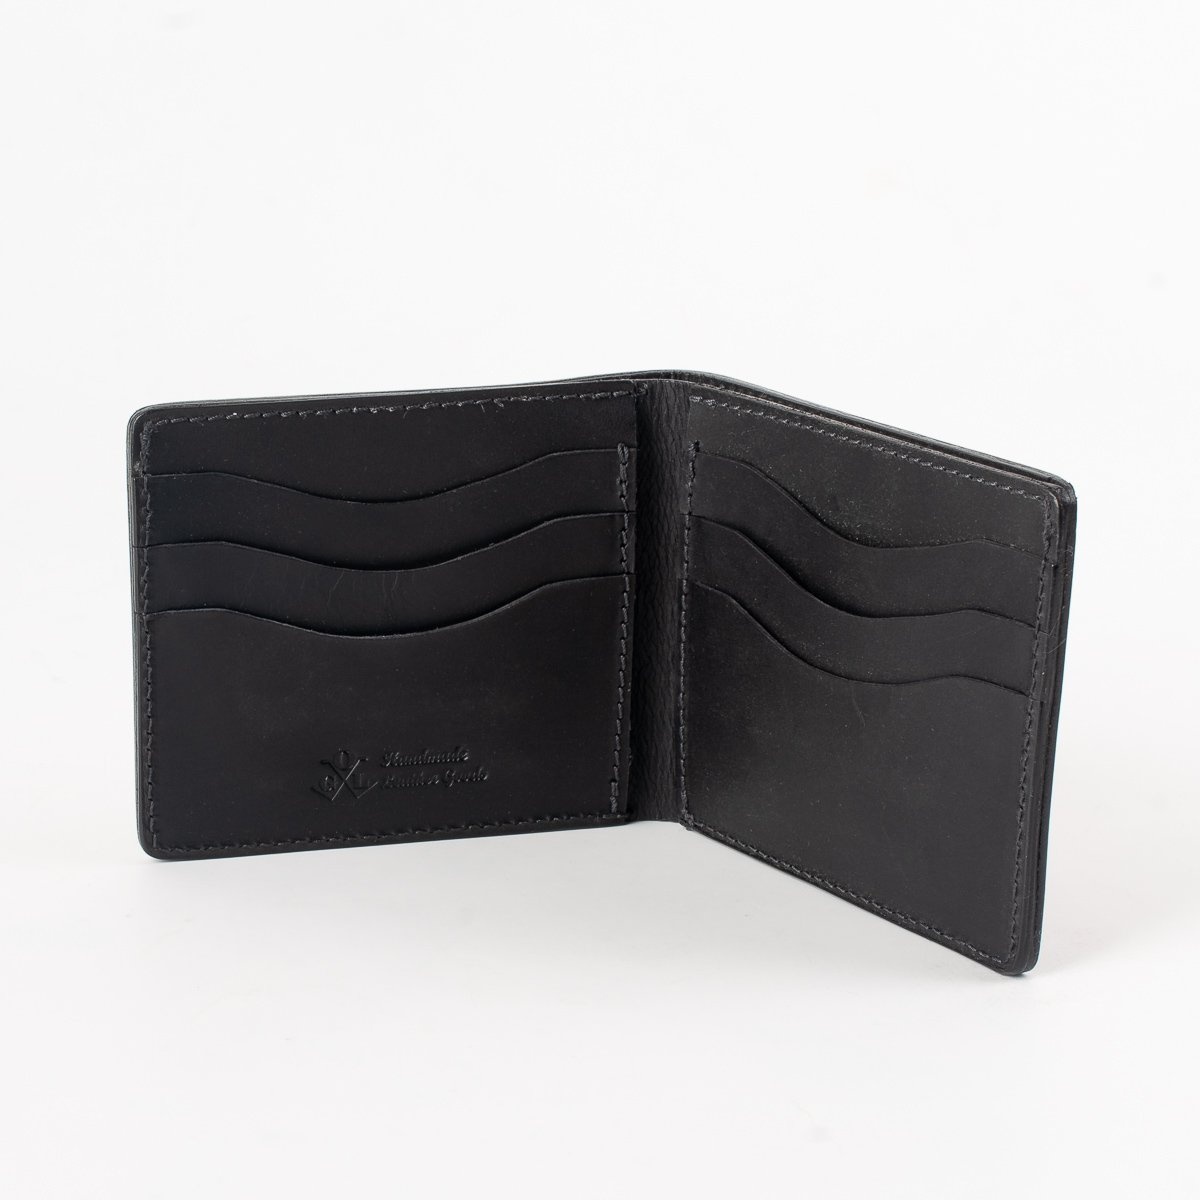 OGL-KINGSMAN-BF OGL Kingsman Classic Bi Fold Wallet - Black, Brown or Tan - 10